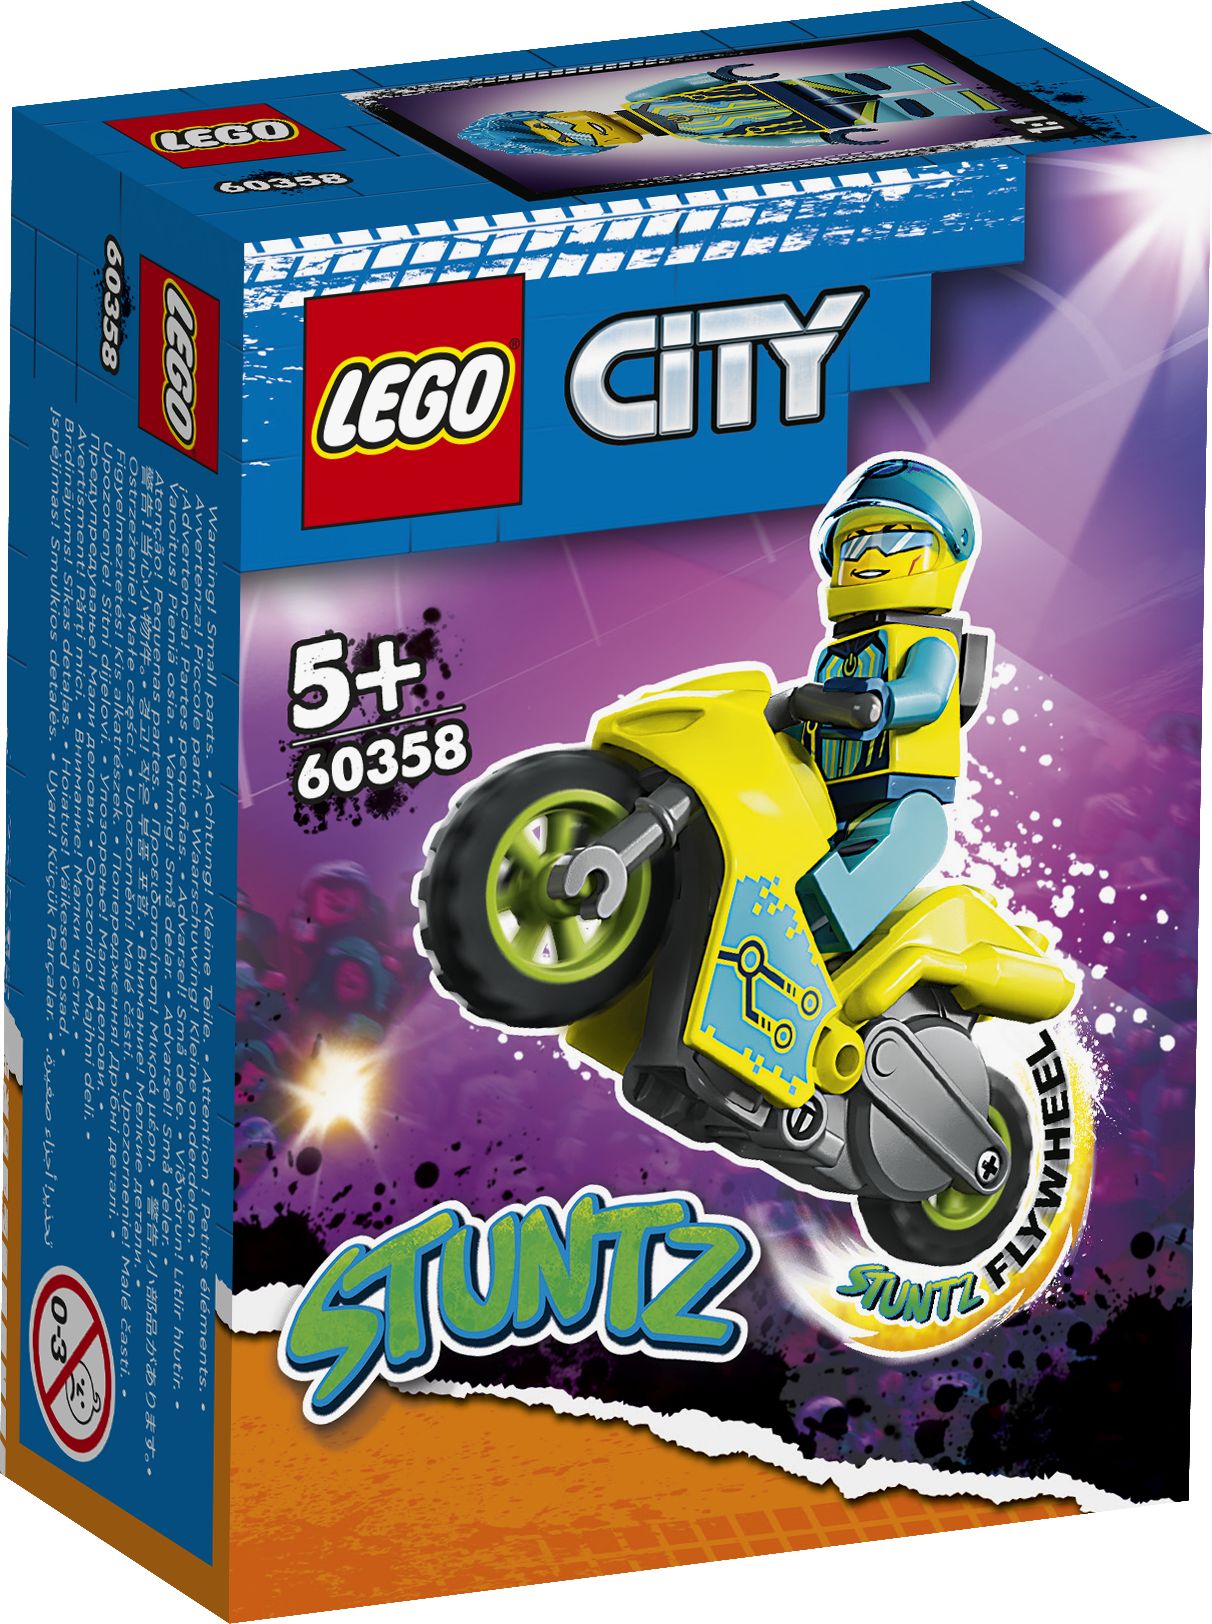 LEGO City 60358 Cyber-Stuntbike LEGO_60358_Box1_v29.jpg